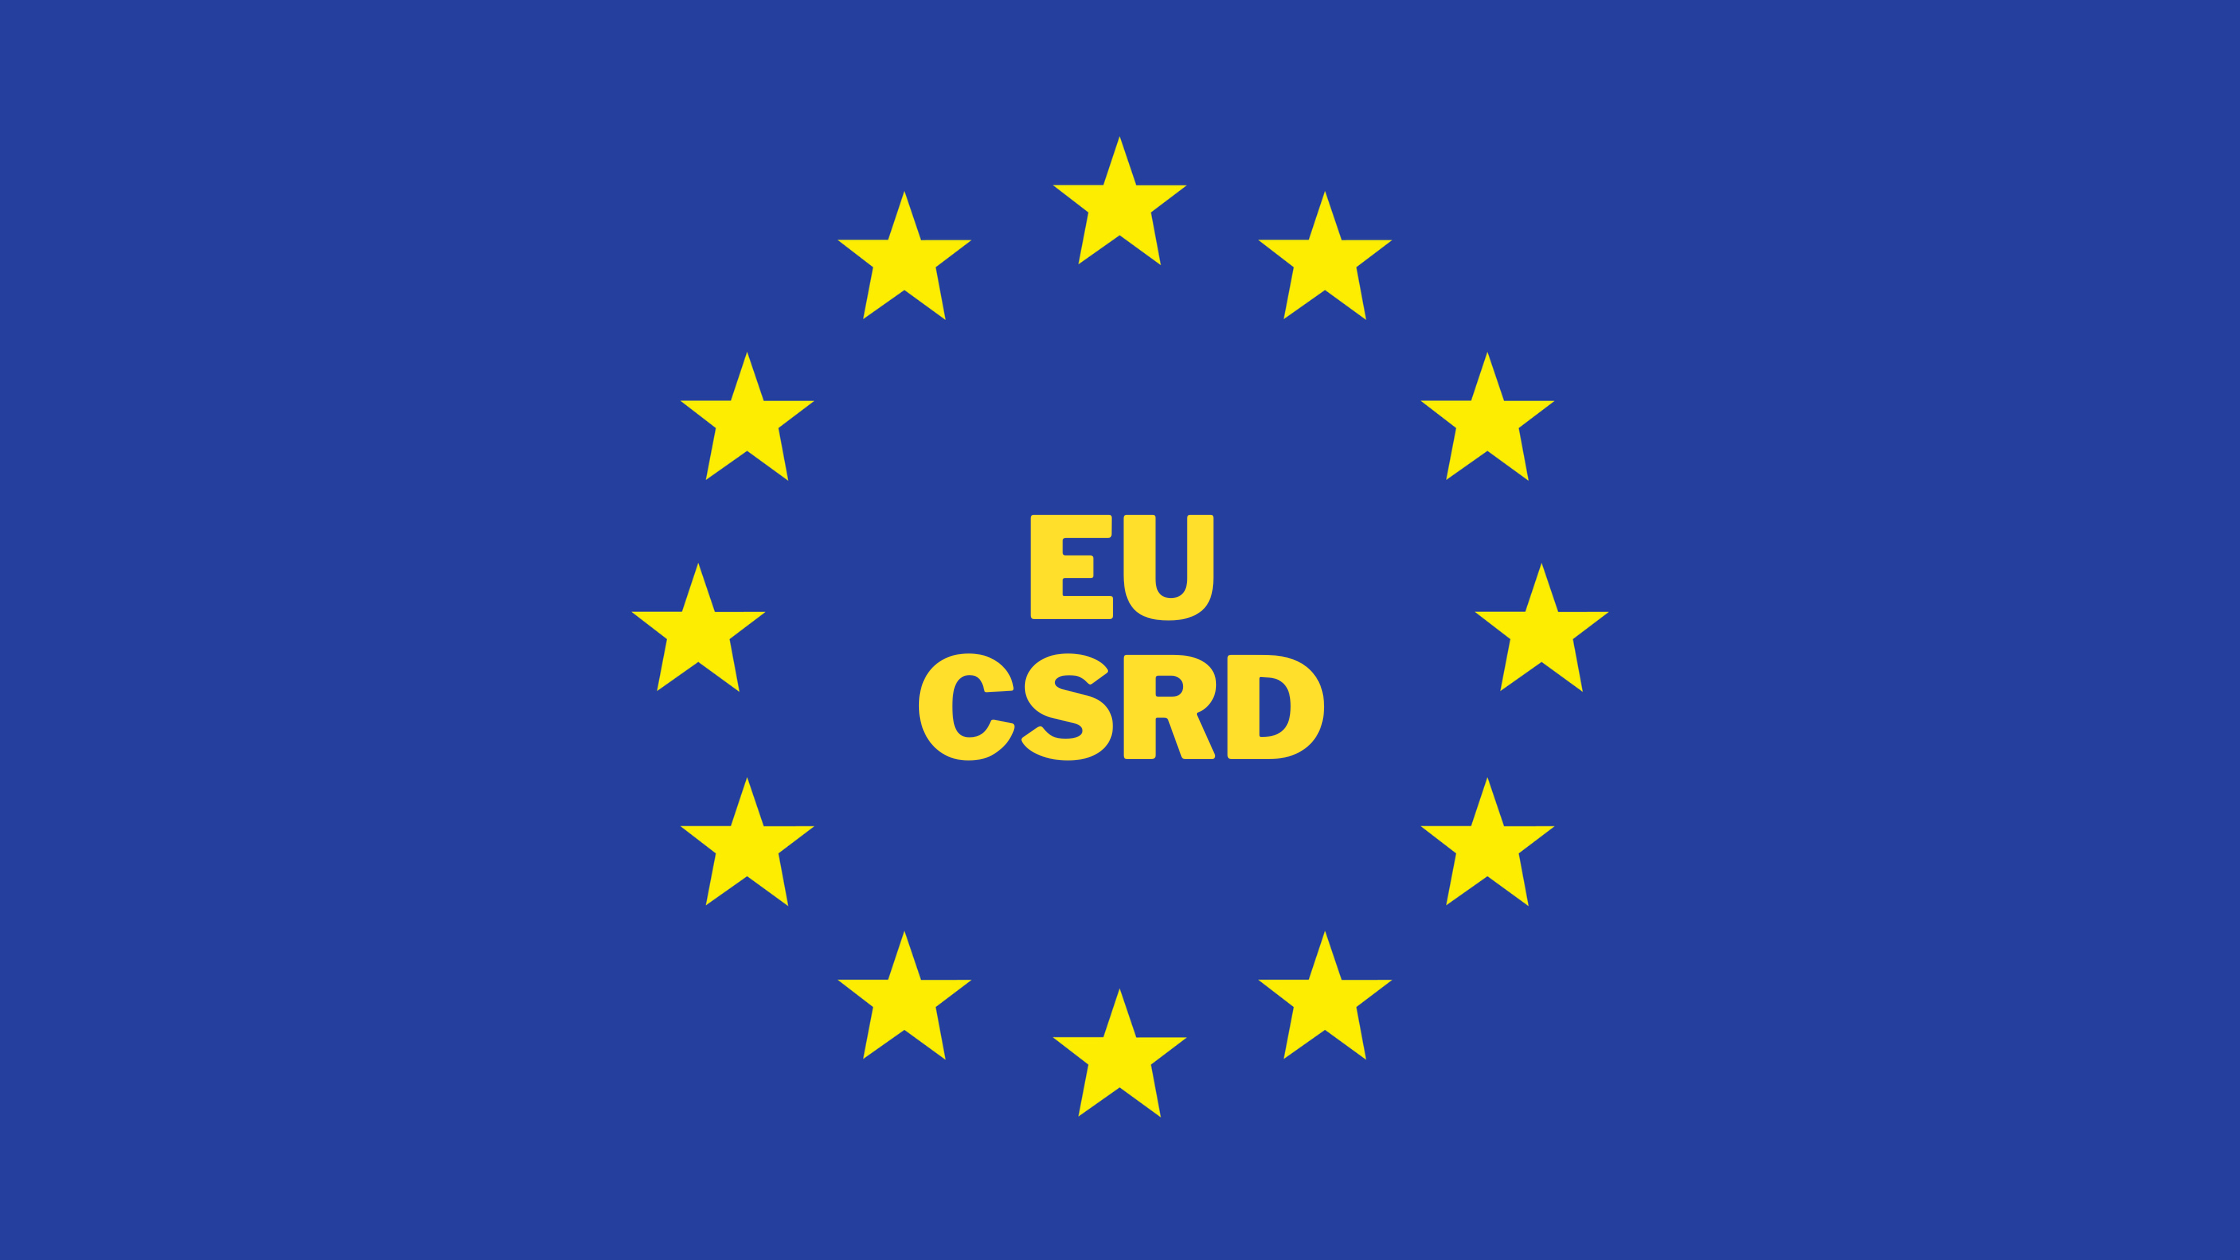 EU Corporate Social Responsibility Directive